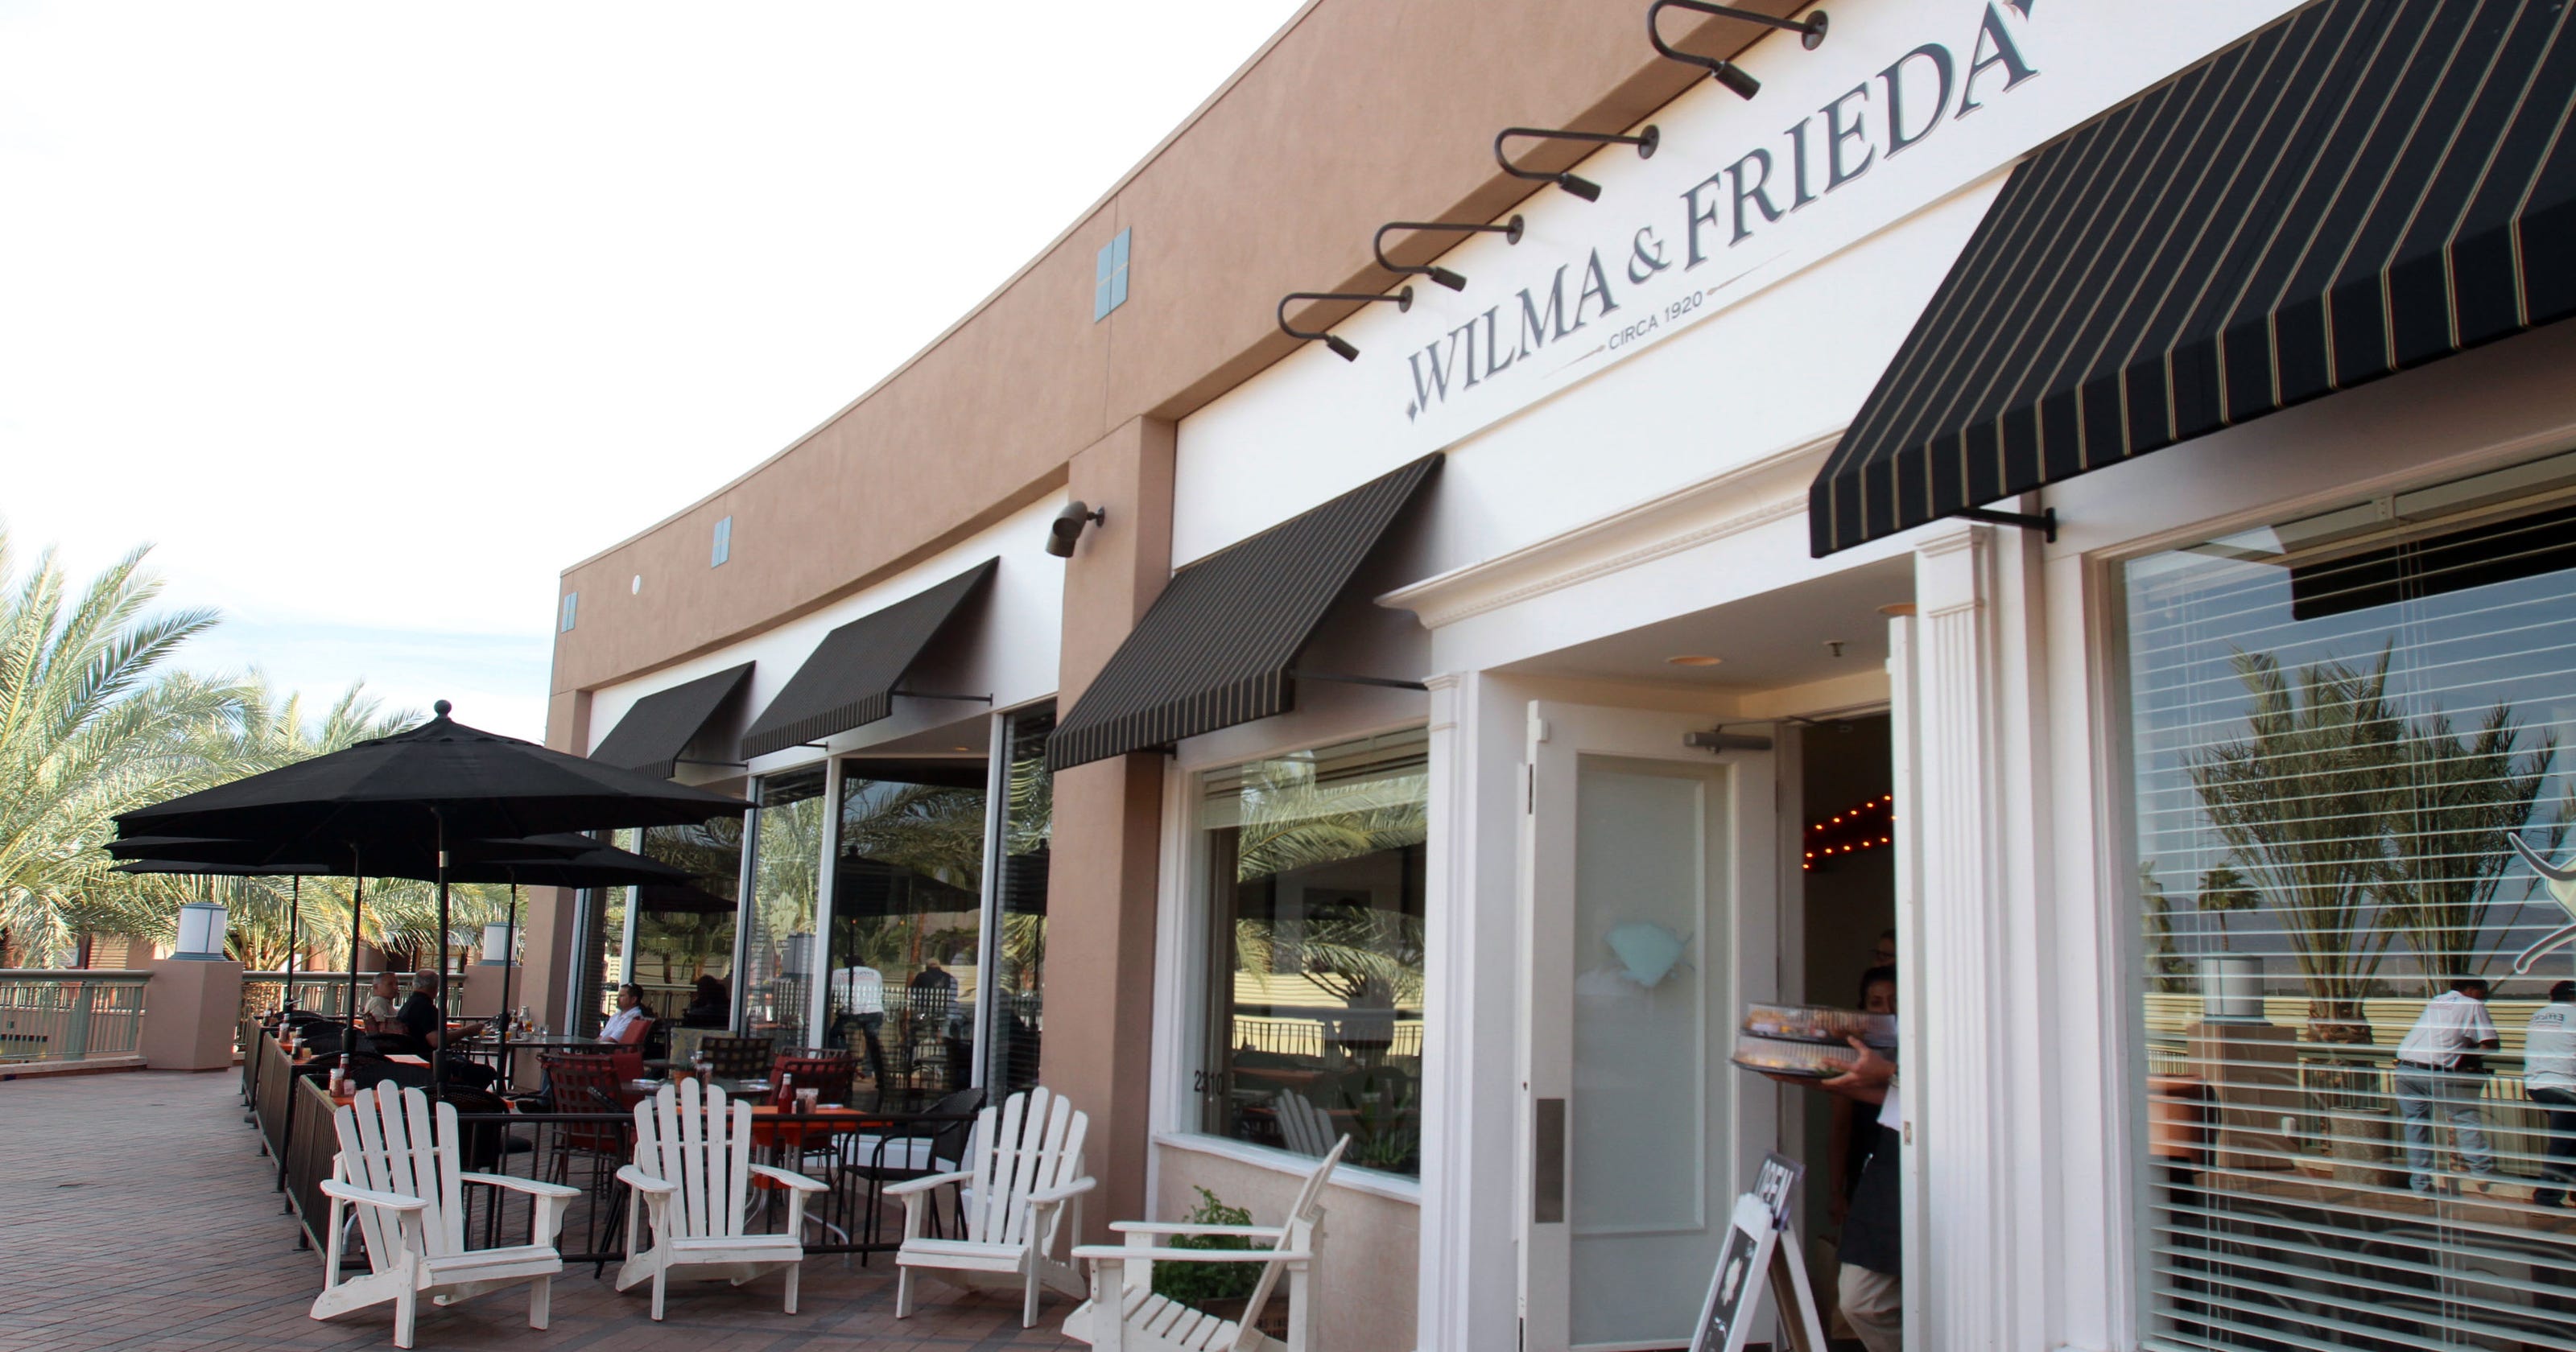 Wilma Friedas Cafe In Palm Desert Serves Guy Fieri Their Short